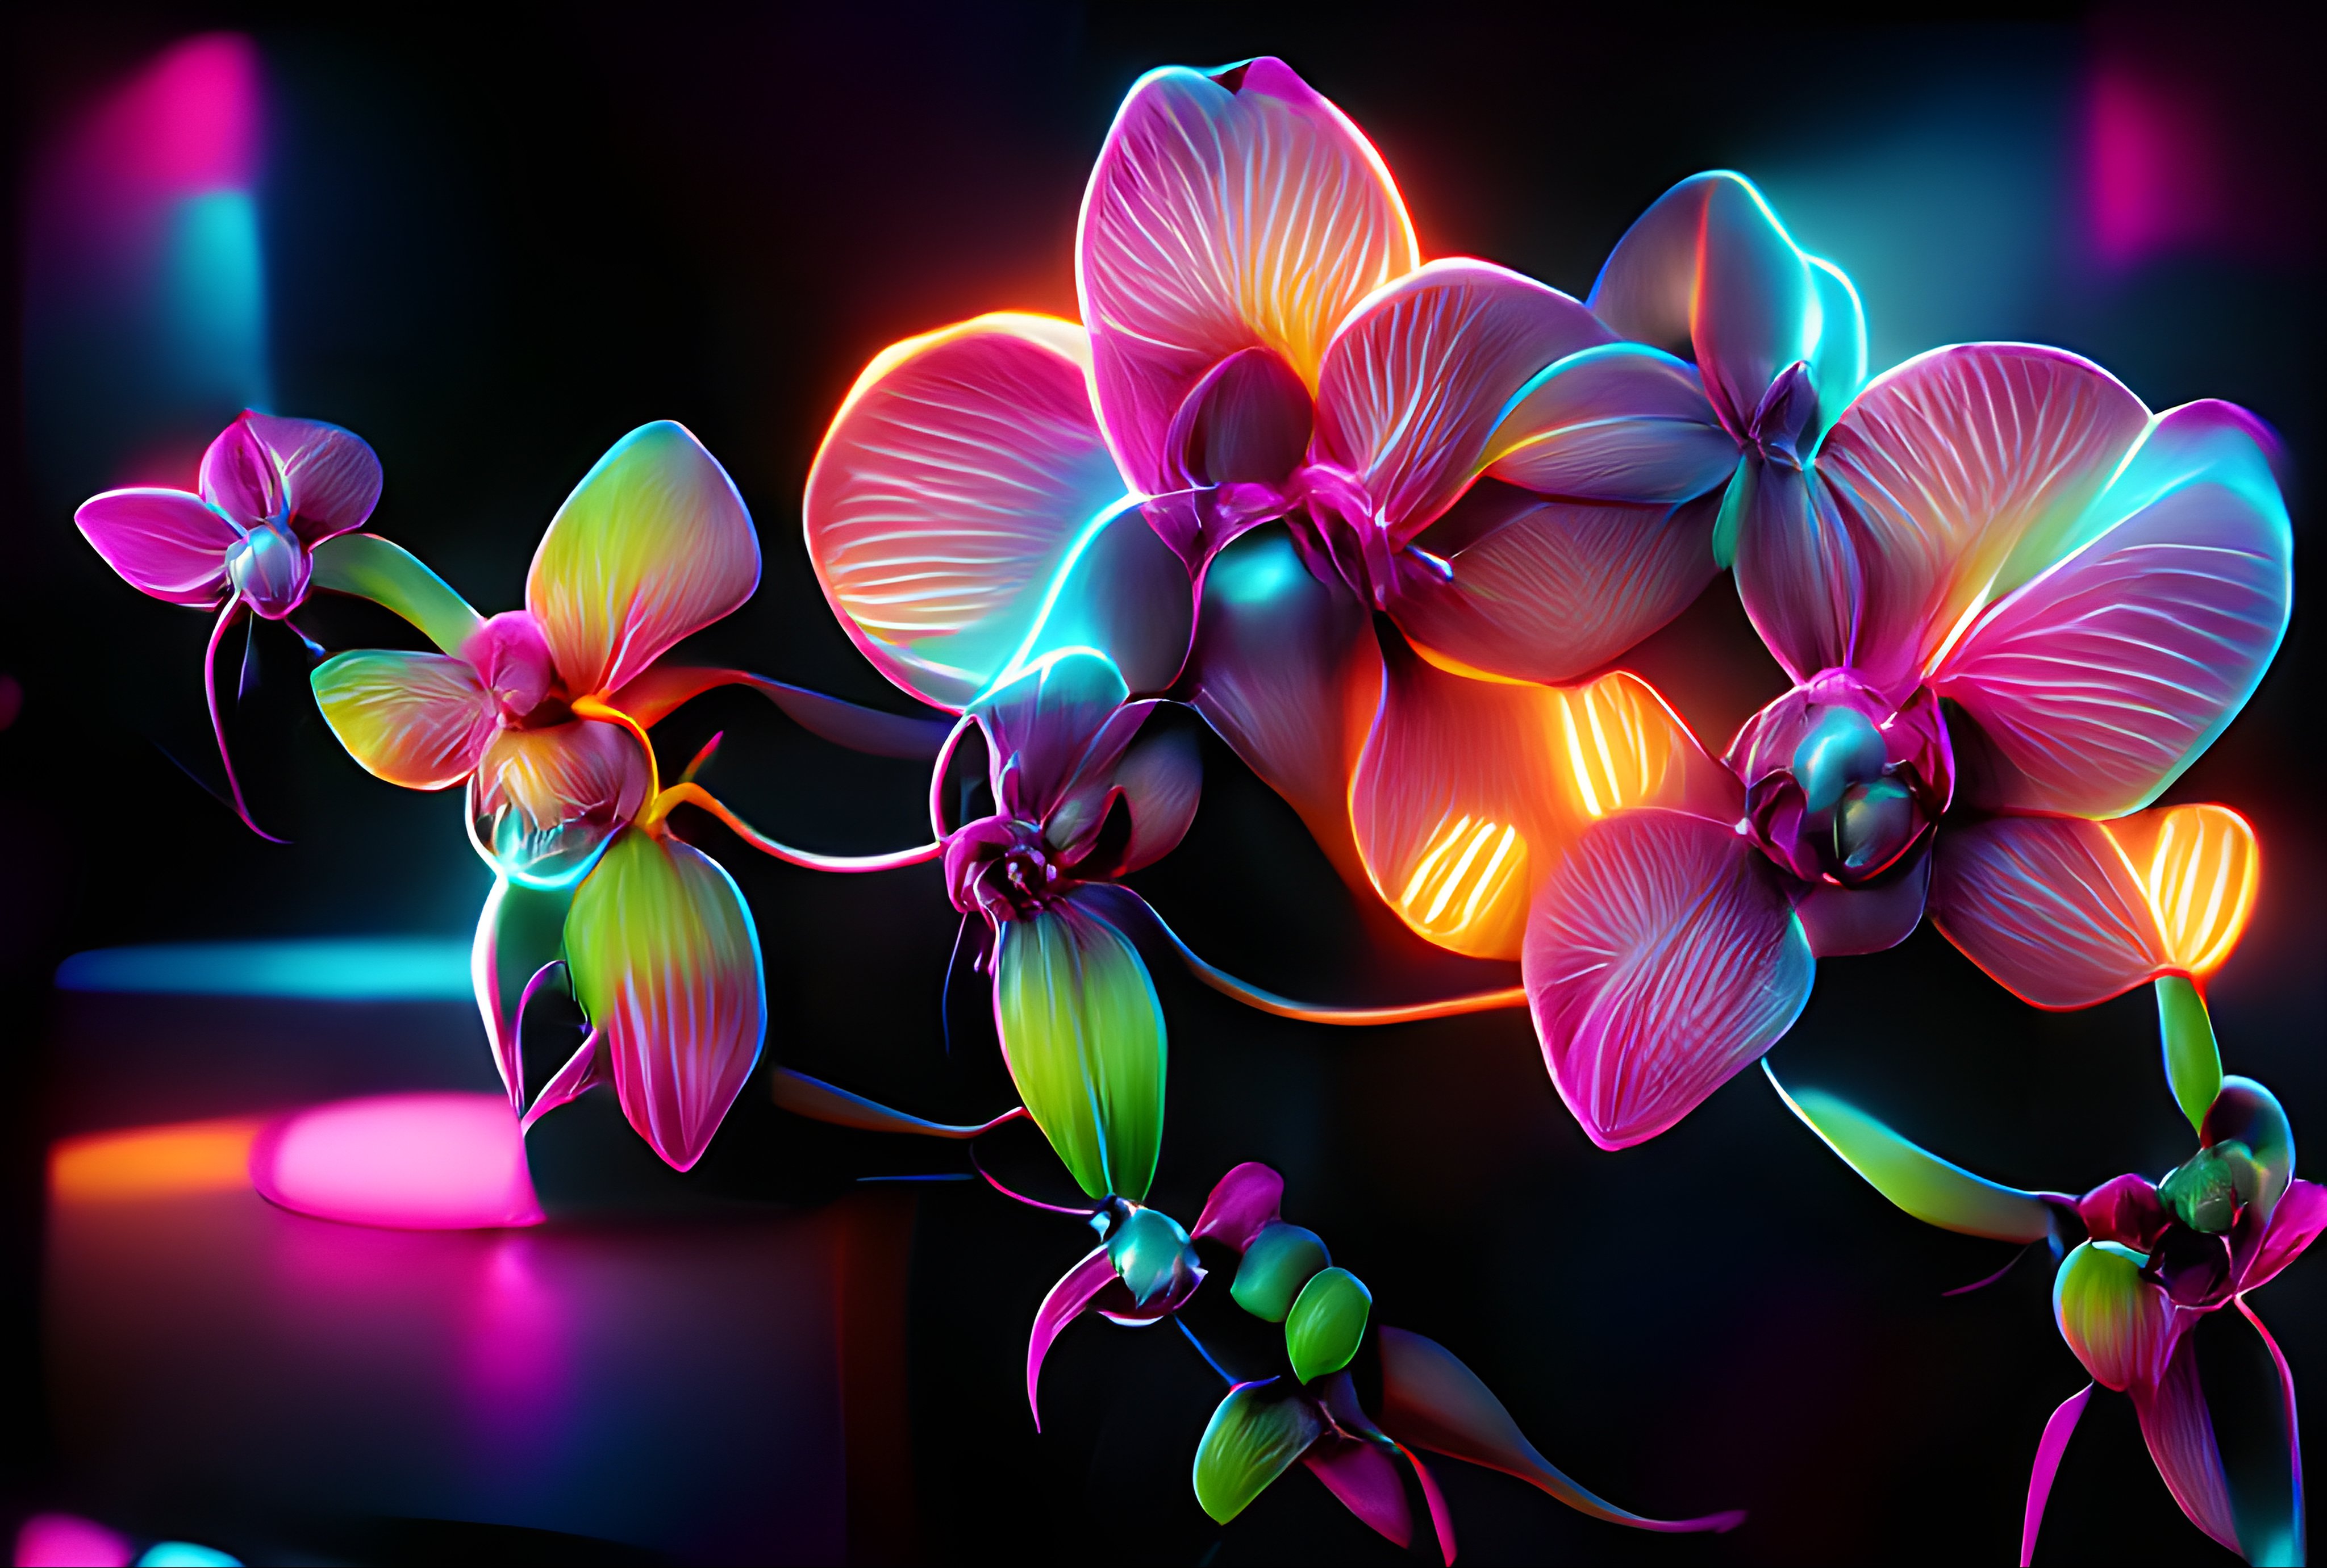 AI ART NFTs on X: Neon orchids. #aigenerated #nft #nftart